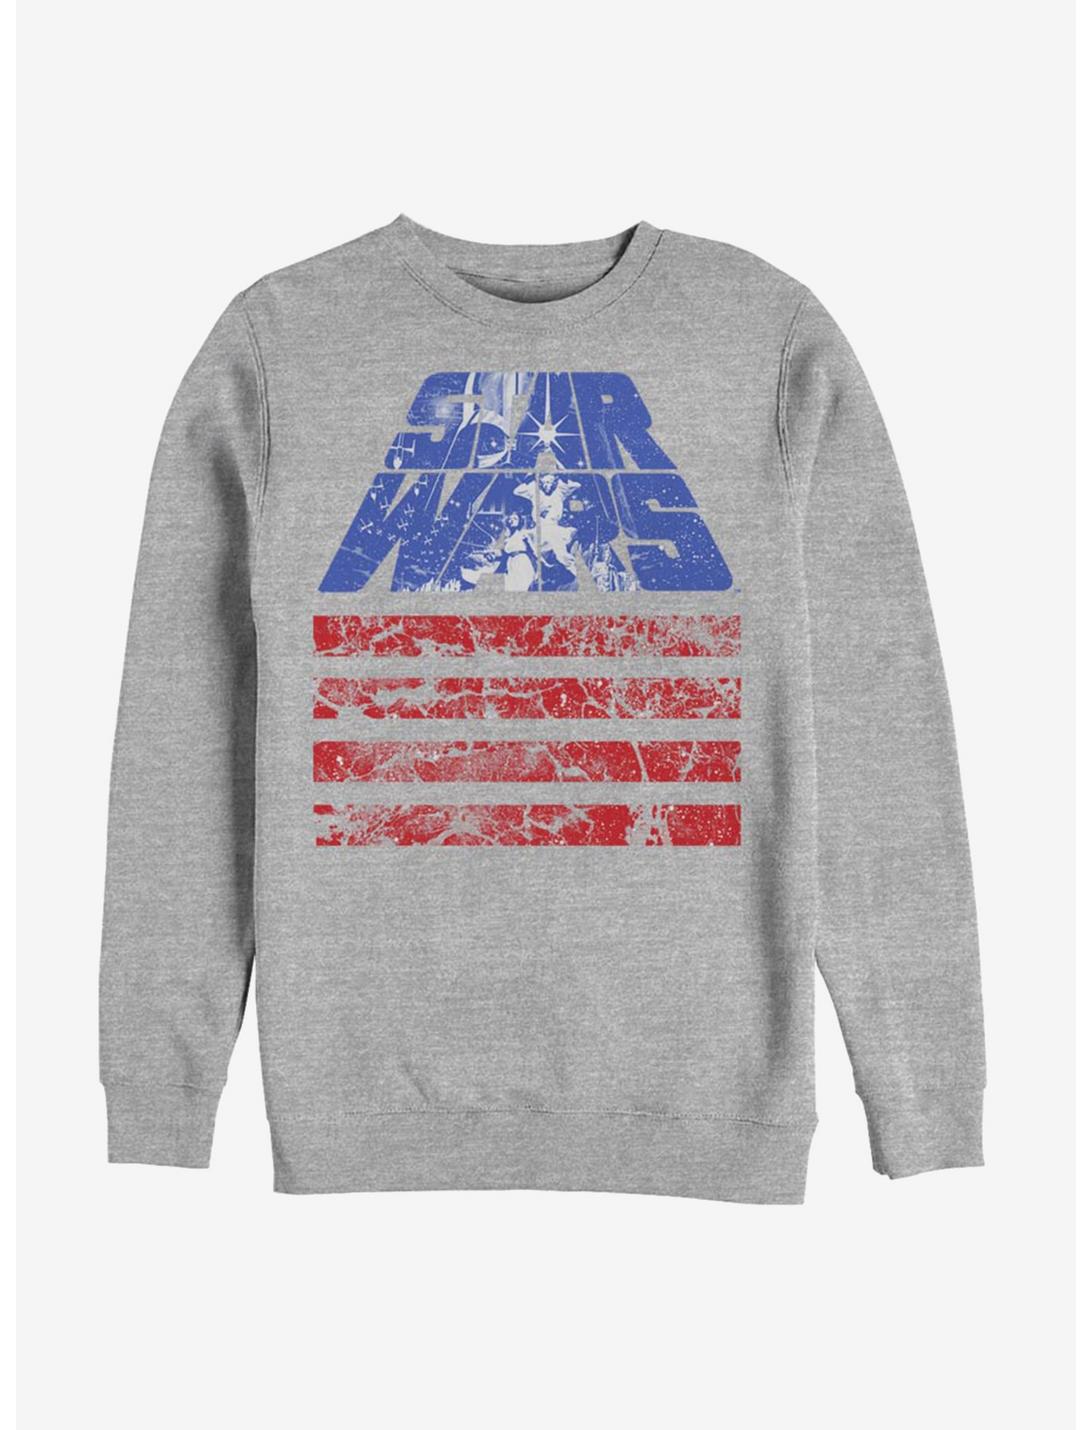 Star Wars Star Glory Sweatshirt, ATH HTR, hi-res